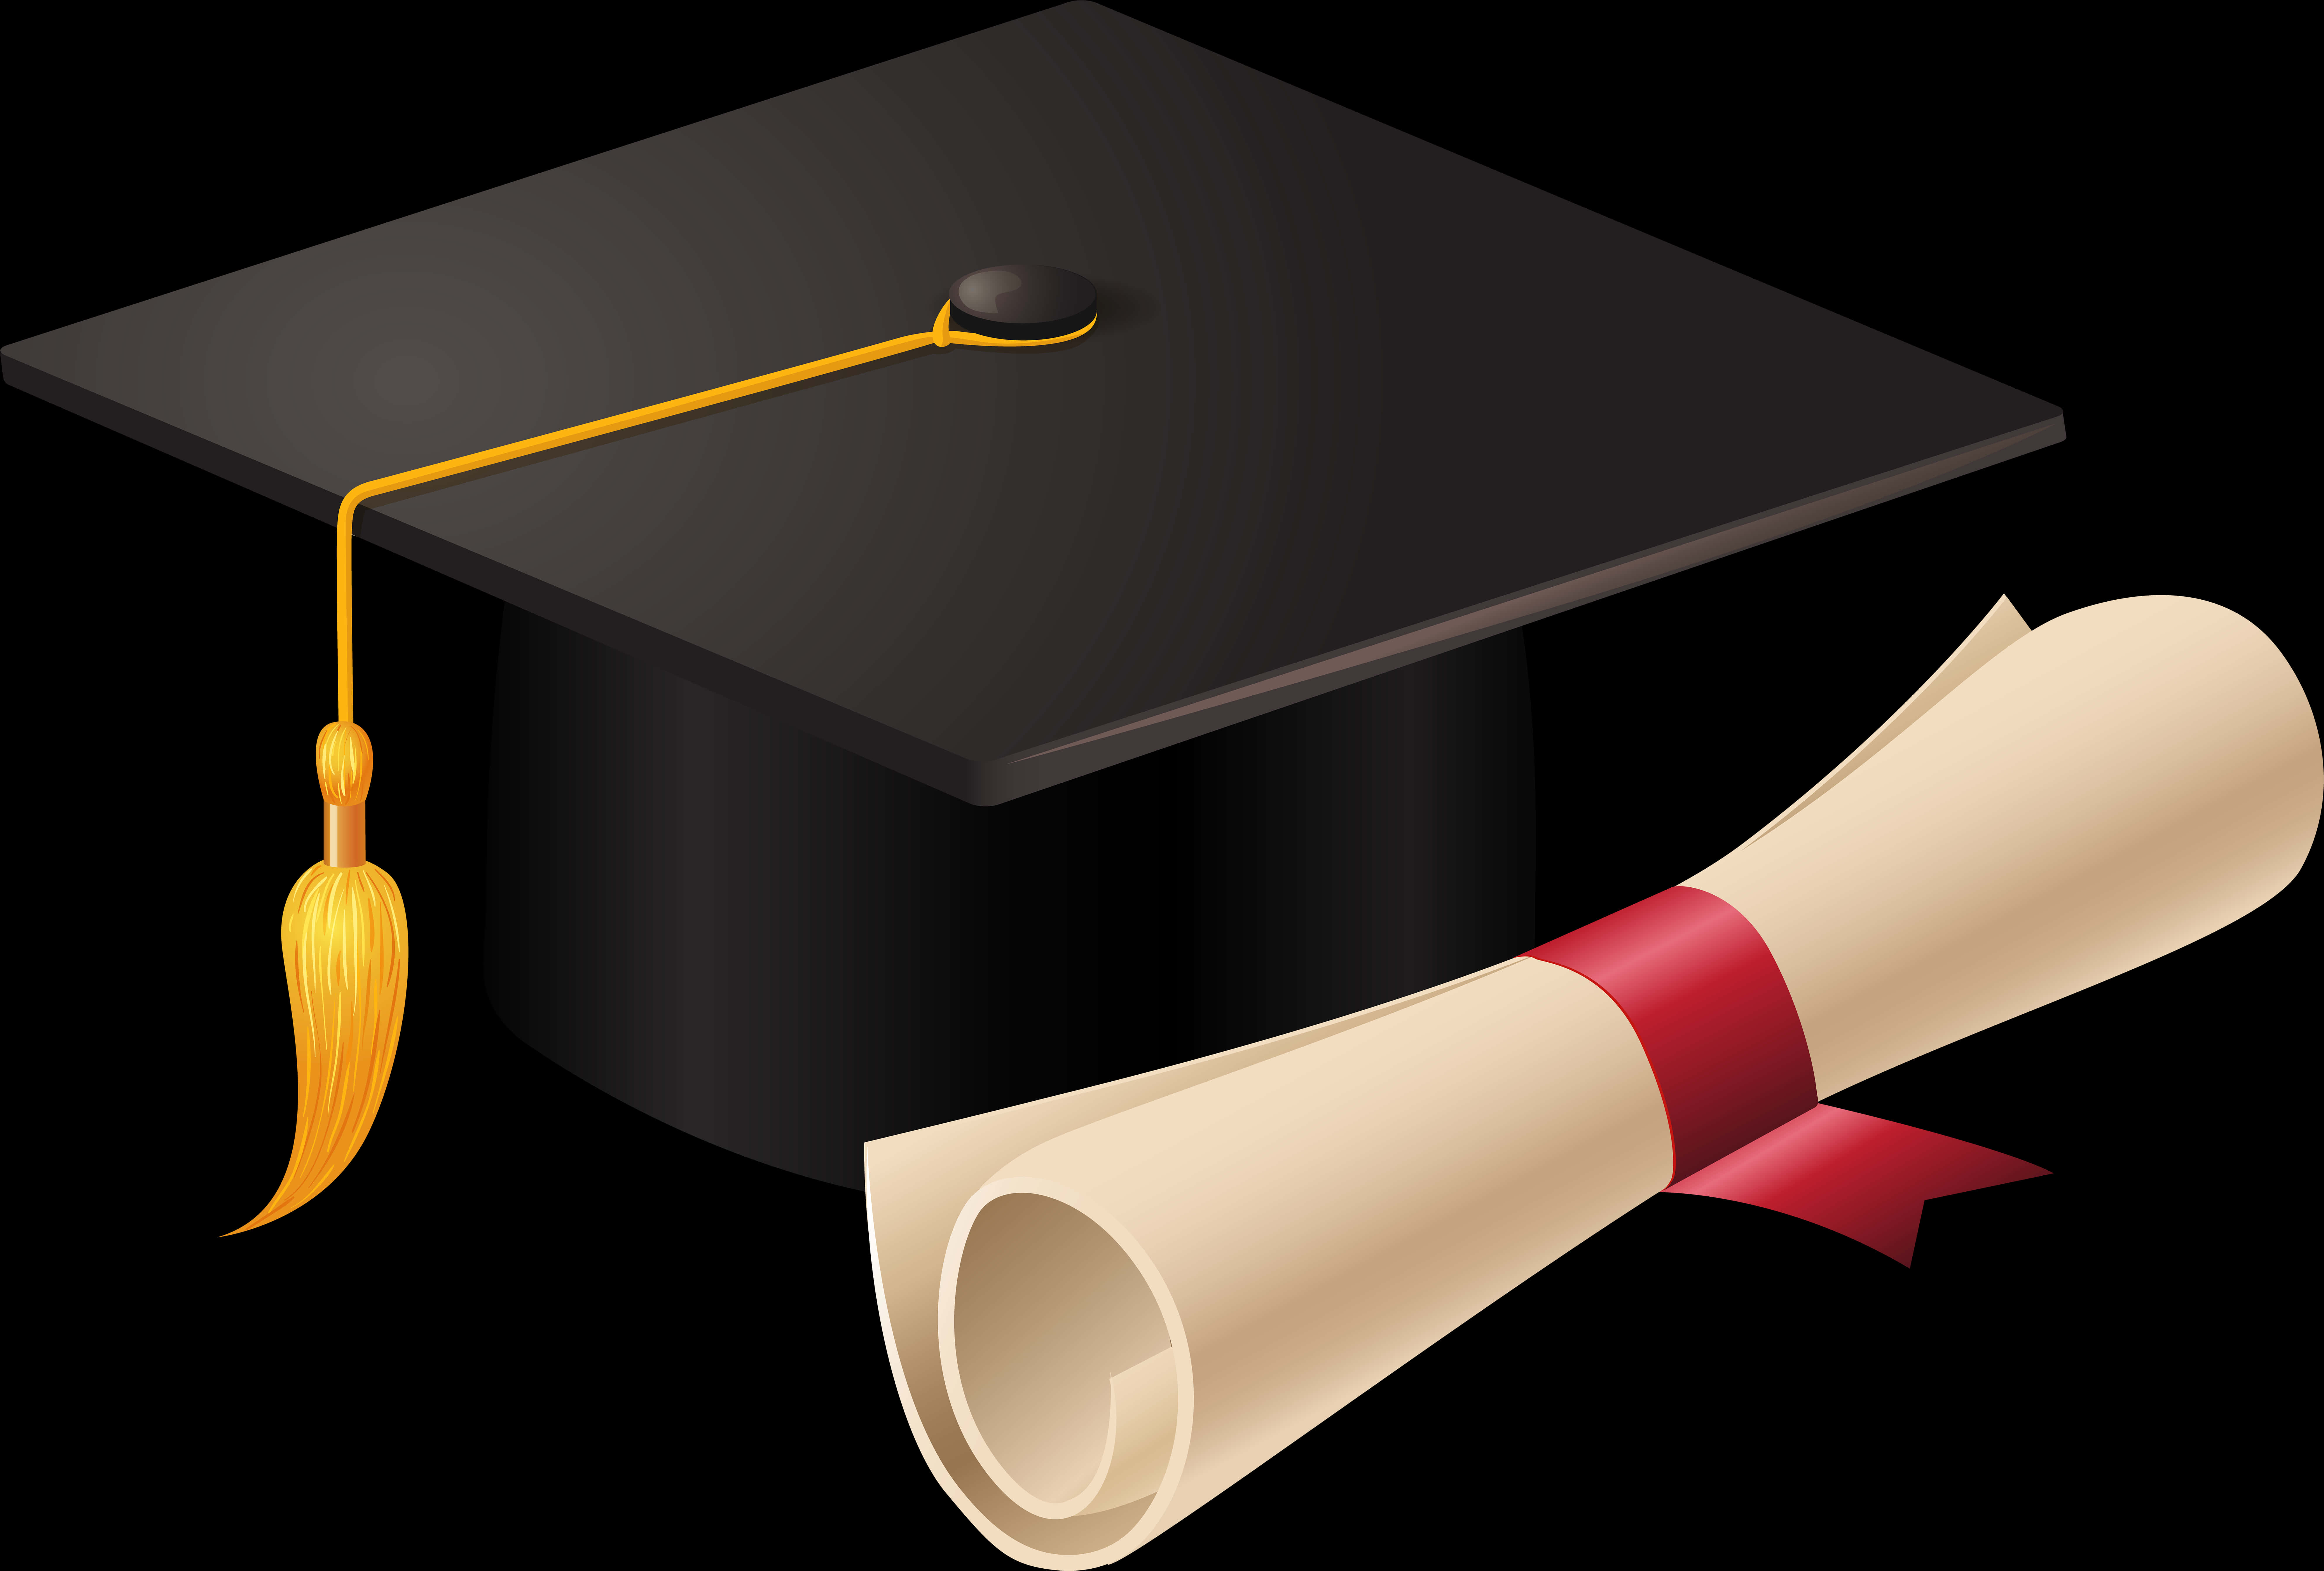 A Graduation Cap And Diploma